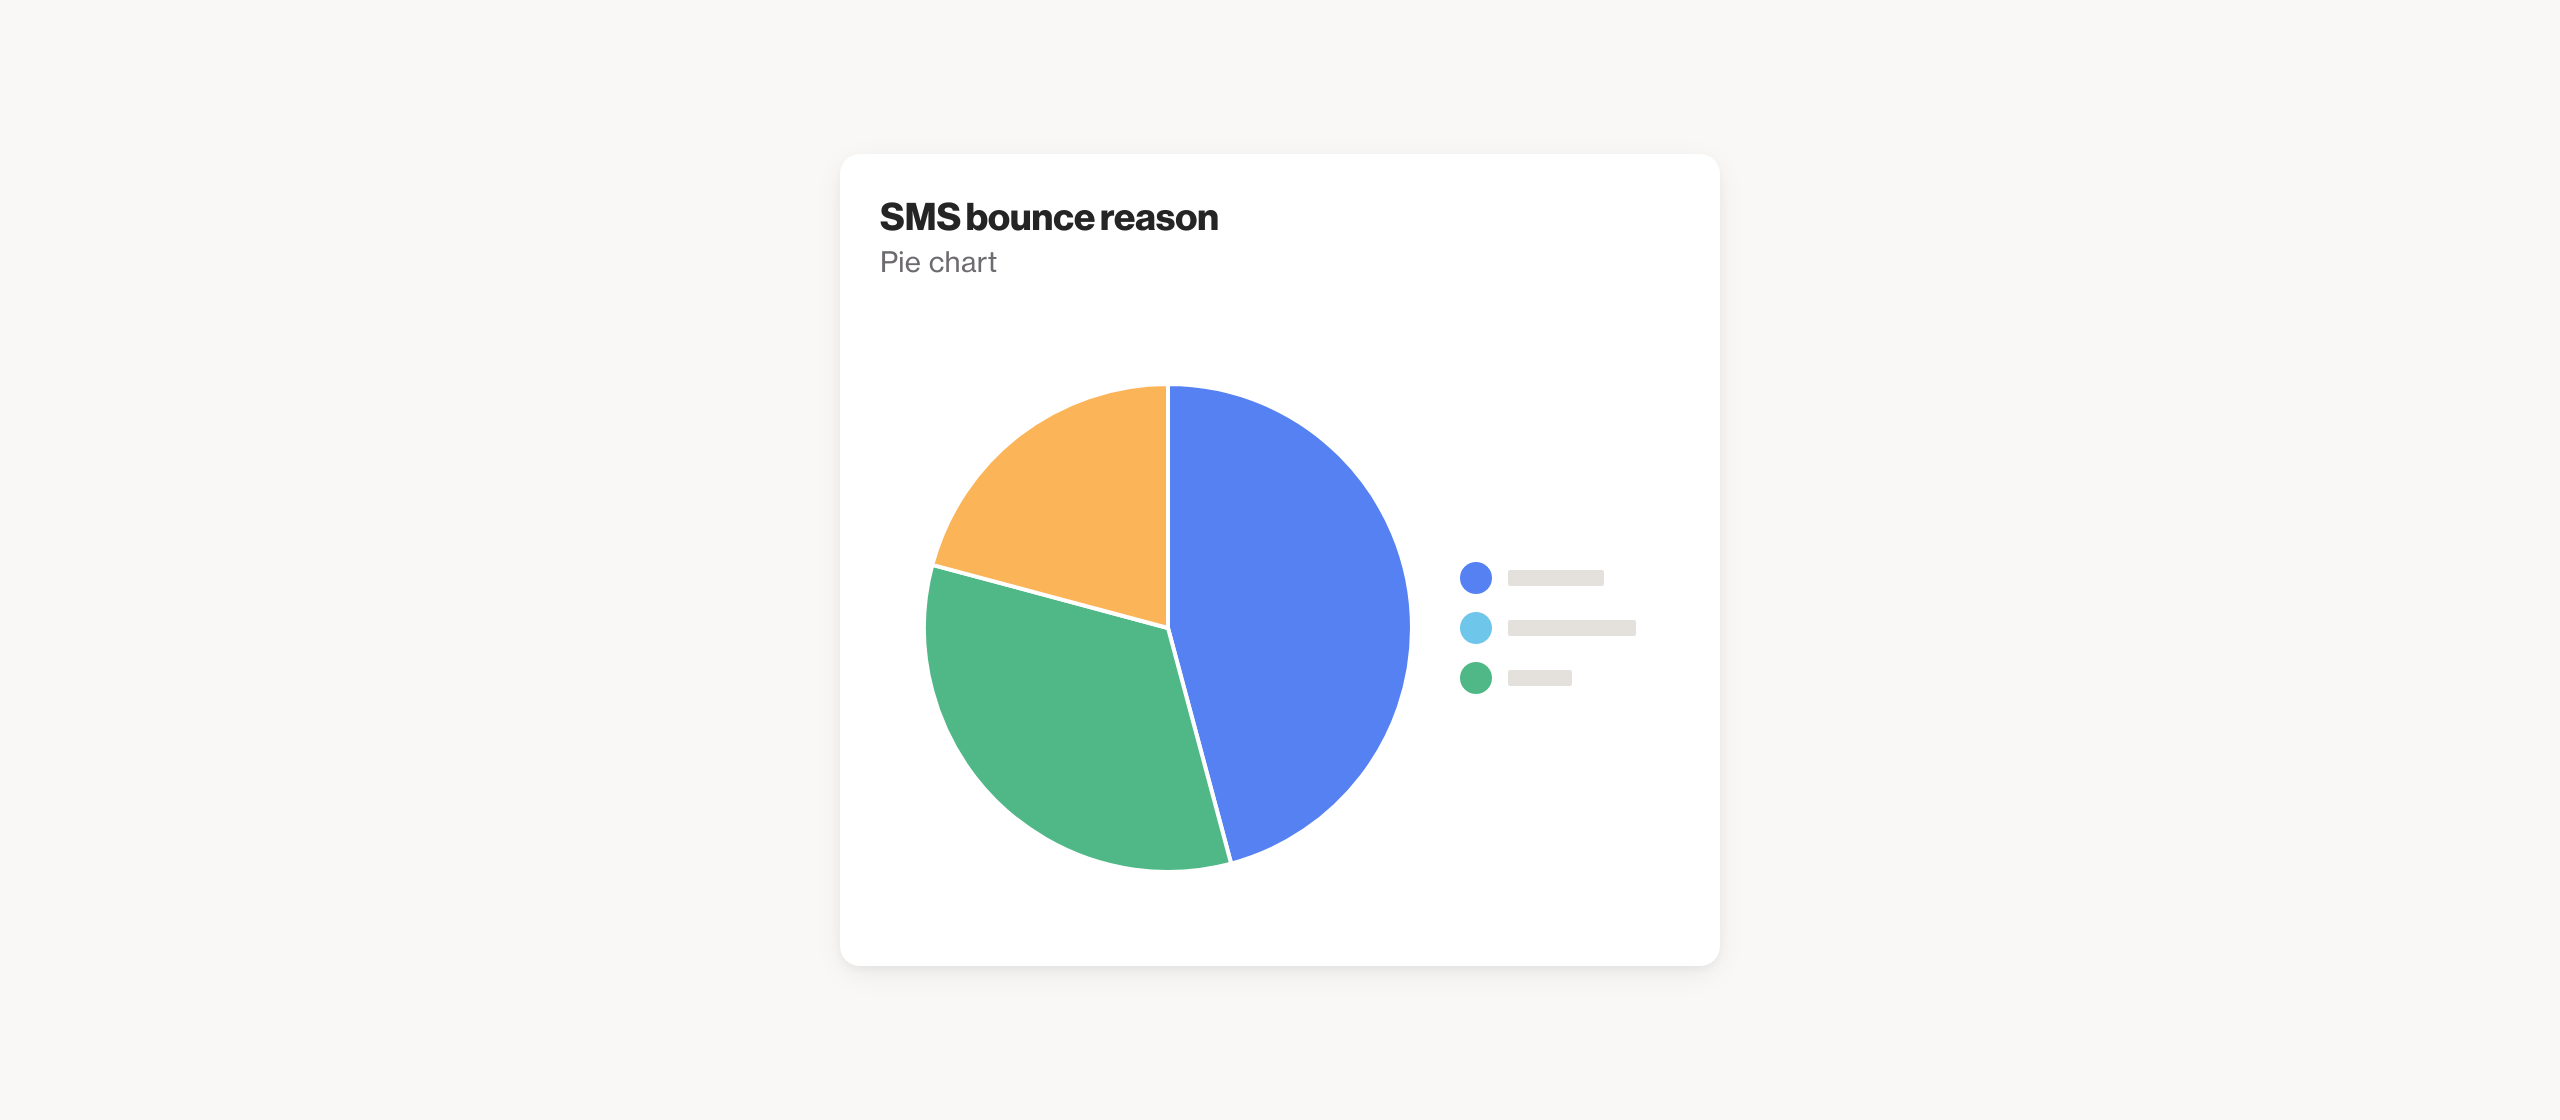 SMS bounce reason